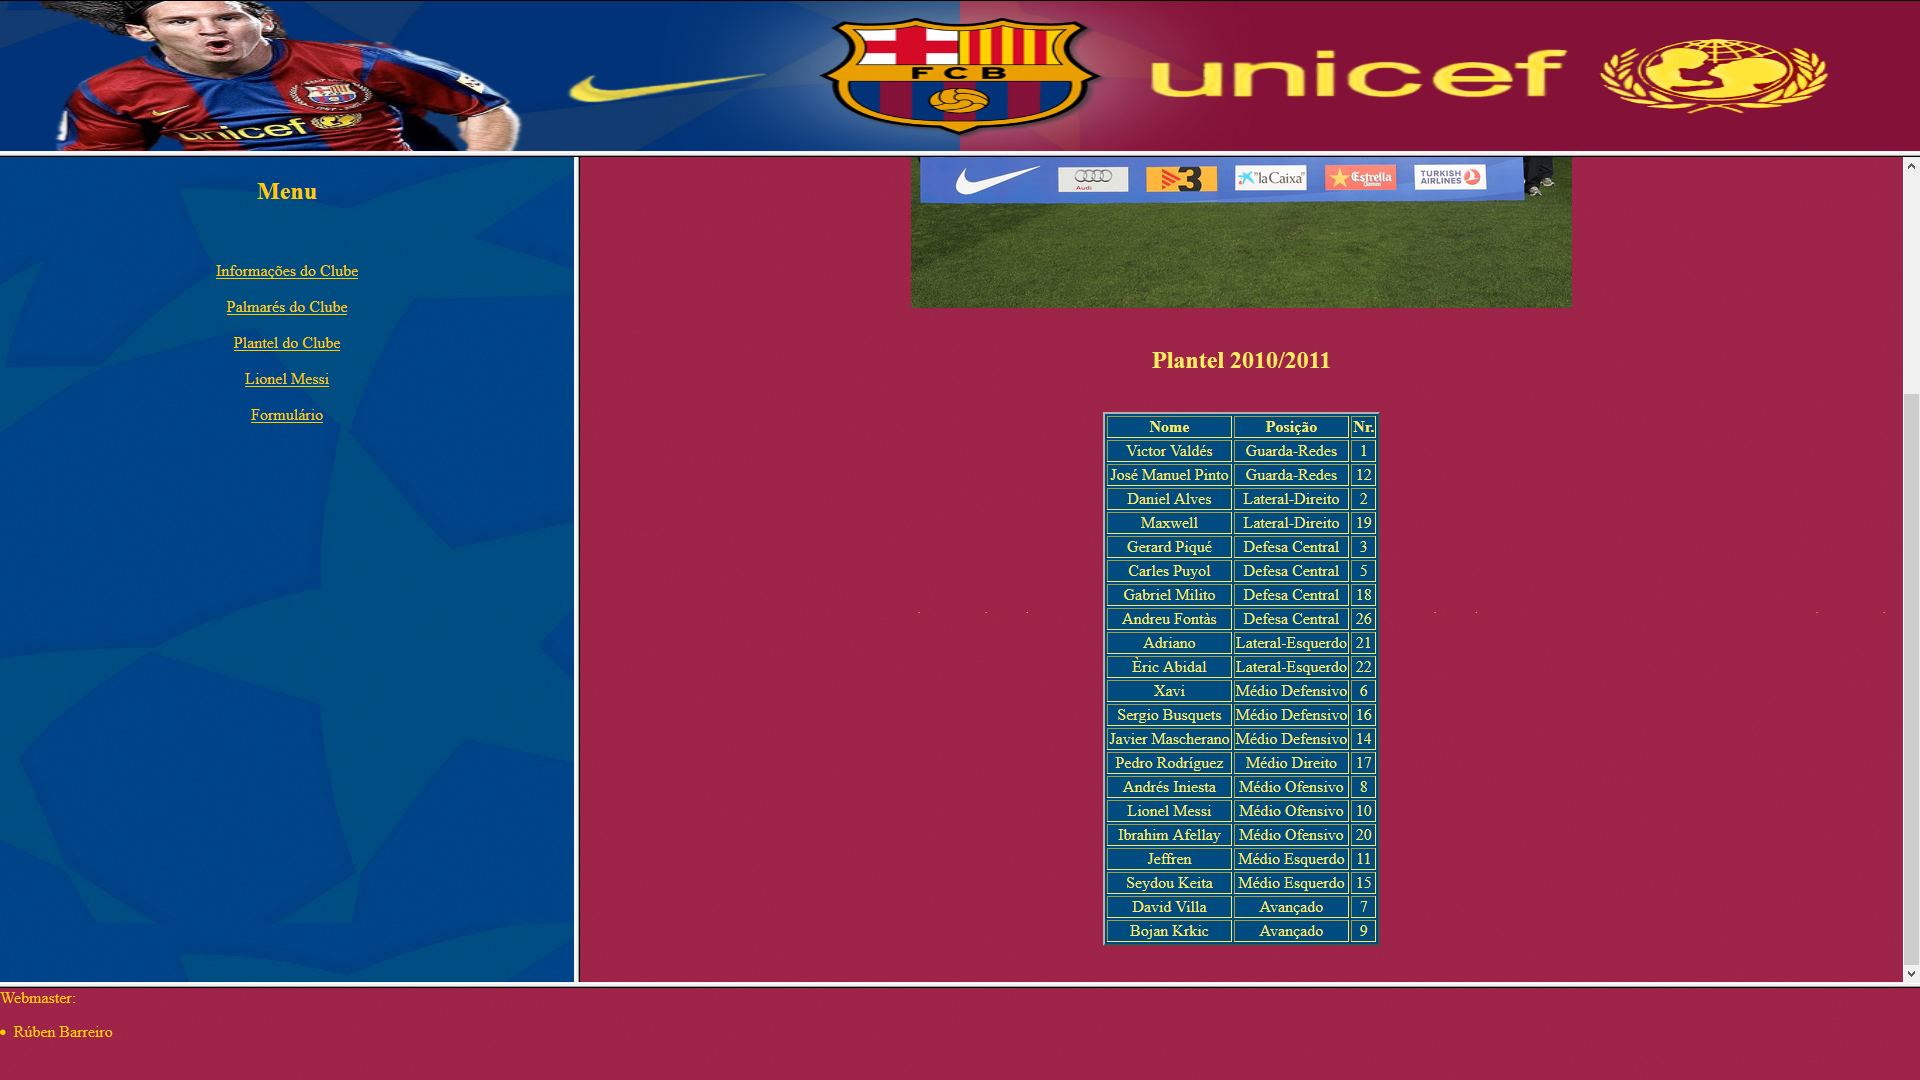 https://raw.githubusercontent.com/rubenandrebarreiro/fc-barcelona-season-10-11-website-demo/master/imgs/JPGs/screenshot-2.jpg